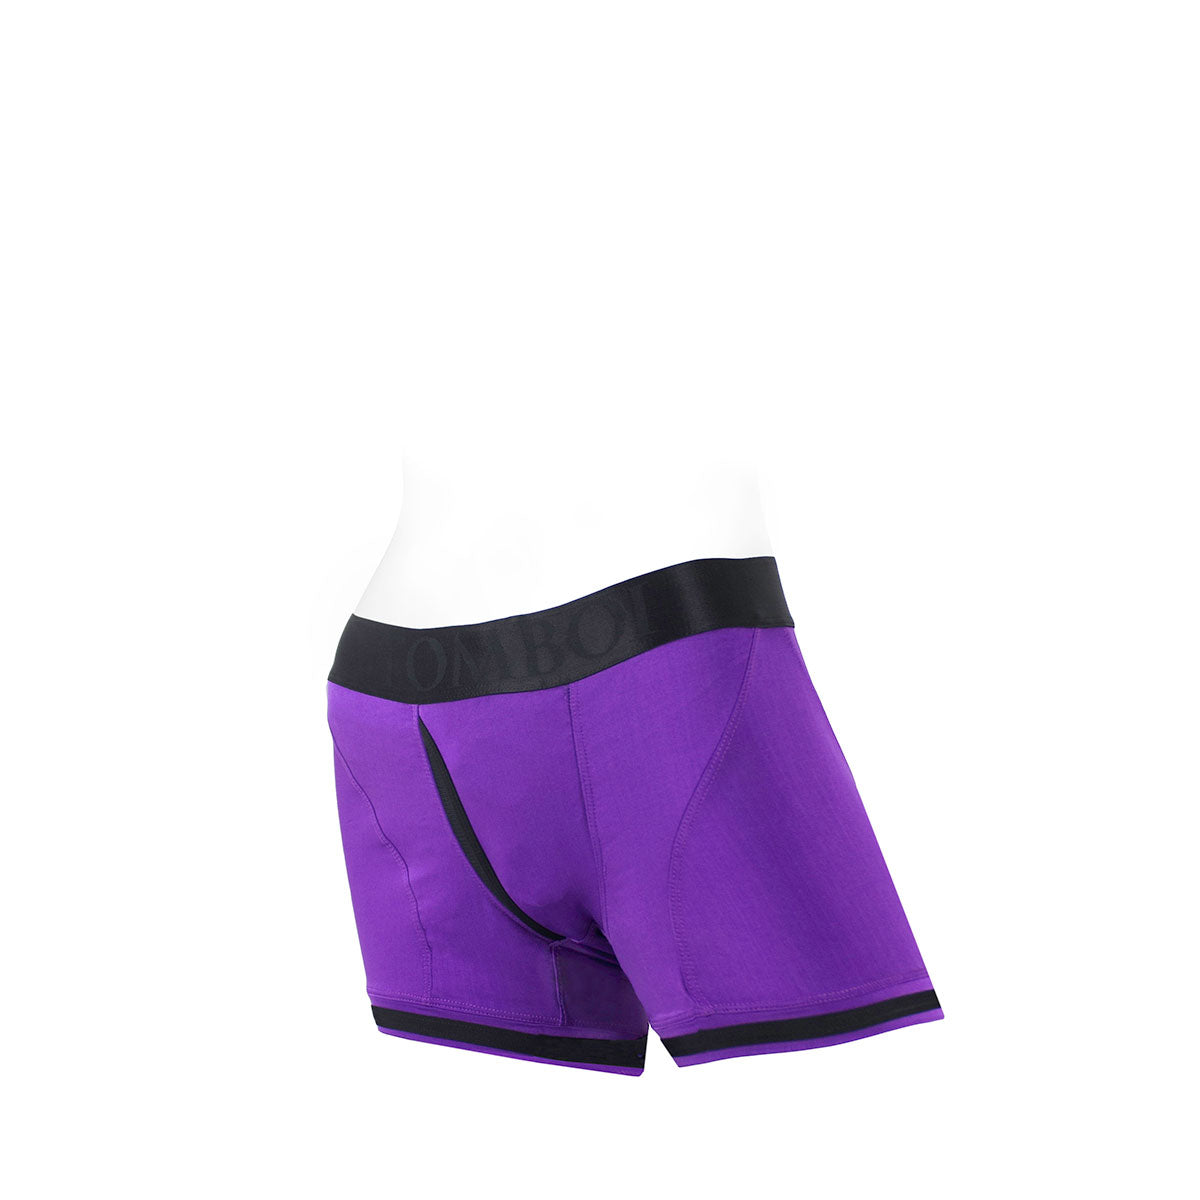 SpareParts Tomboii Purple-Black Nylon - Small Intimates Adult Boutique